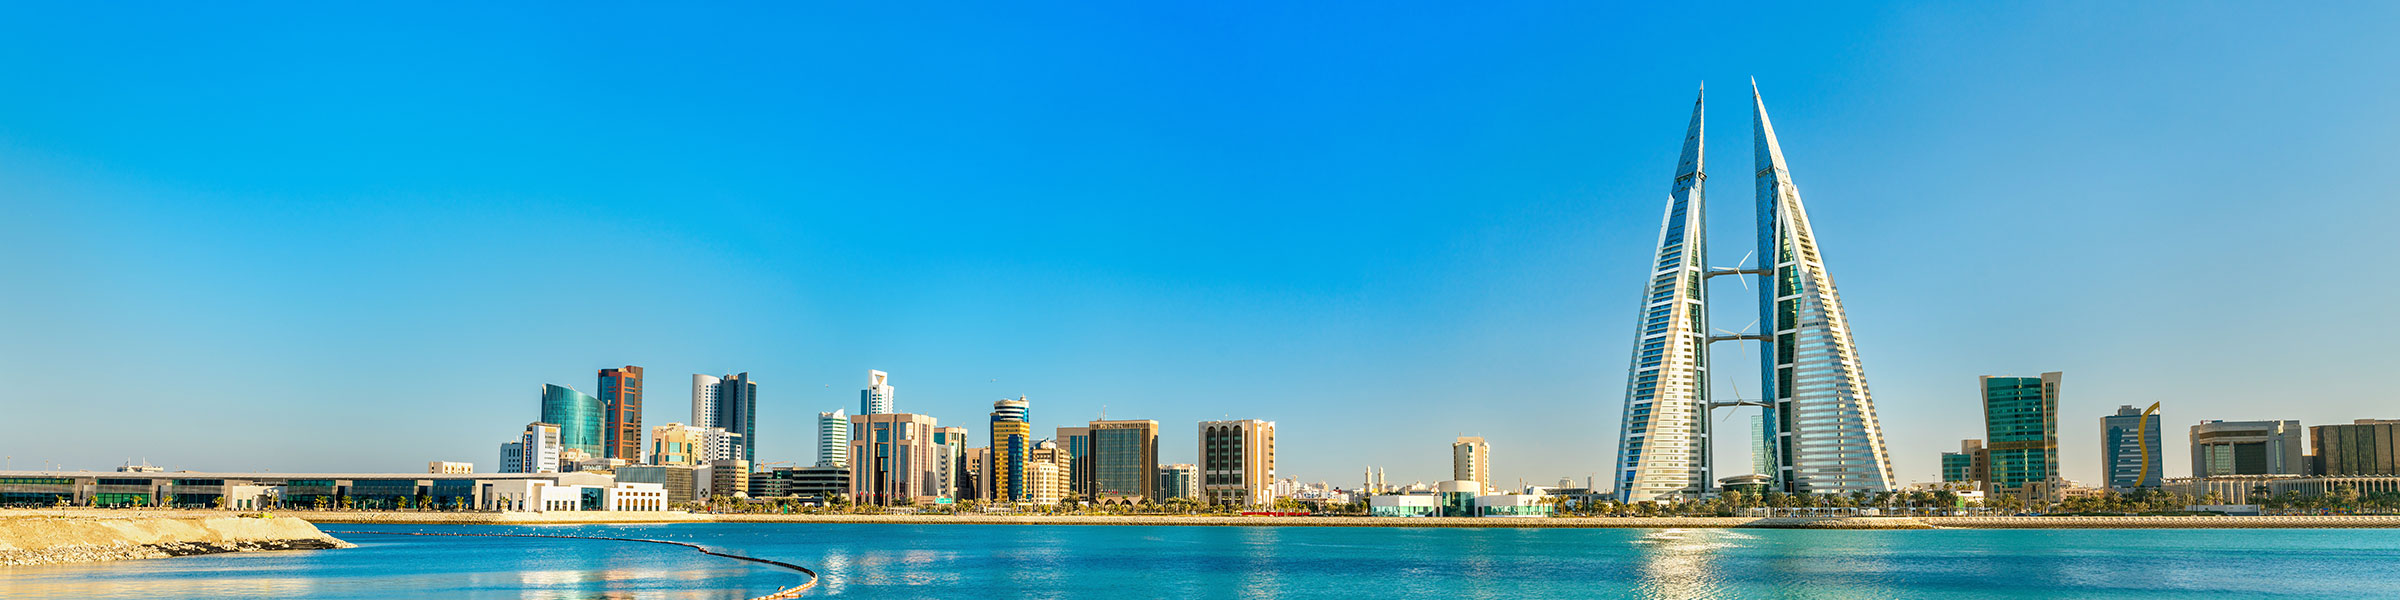 Skyline of Manama Central Business District, Bahrain